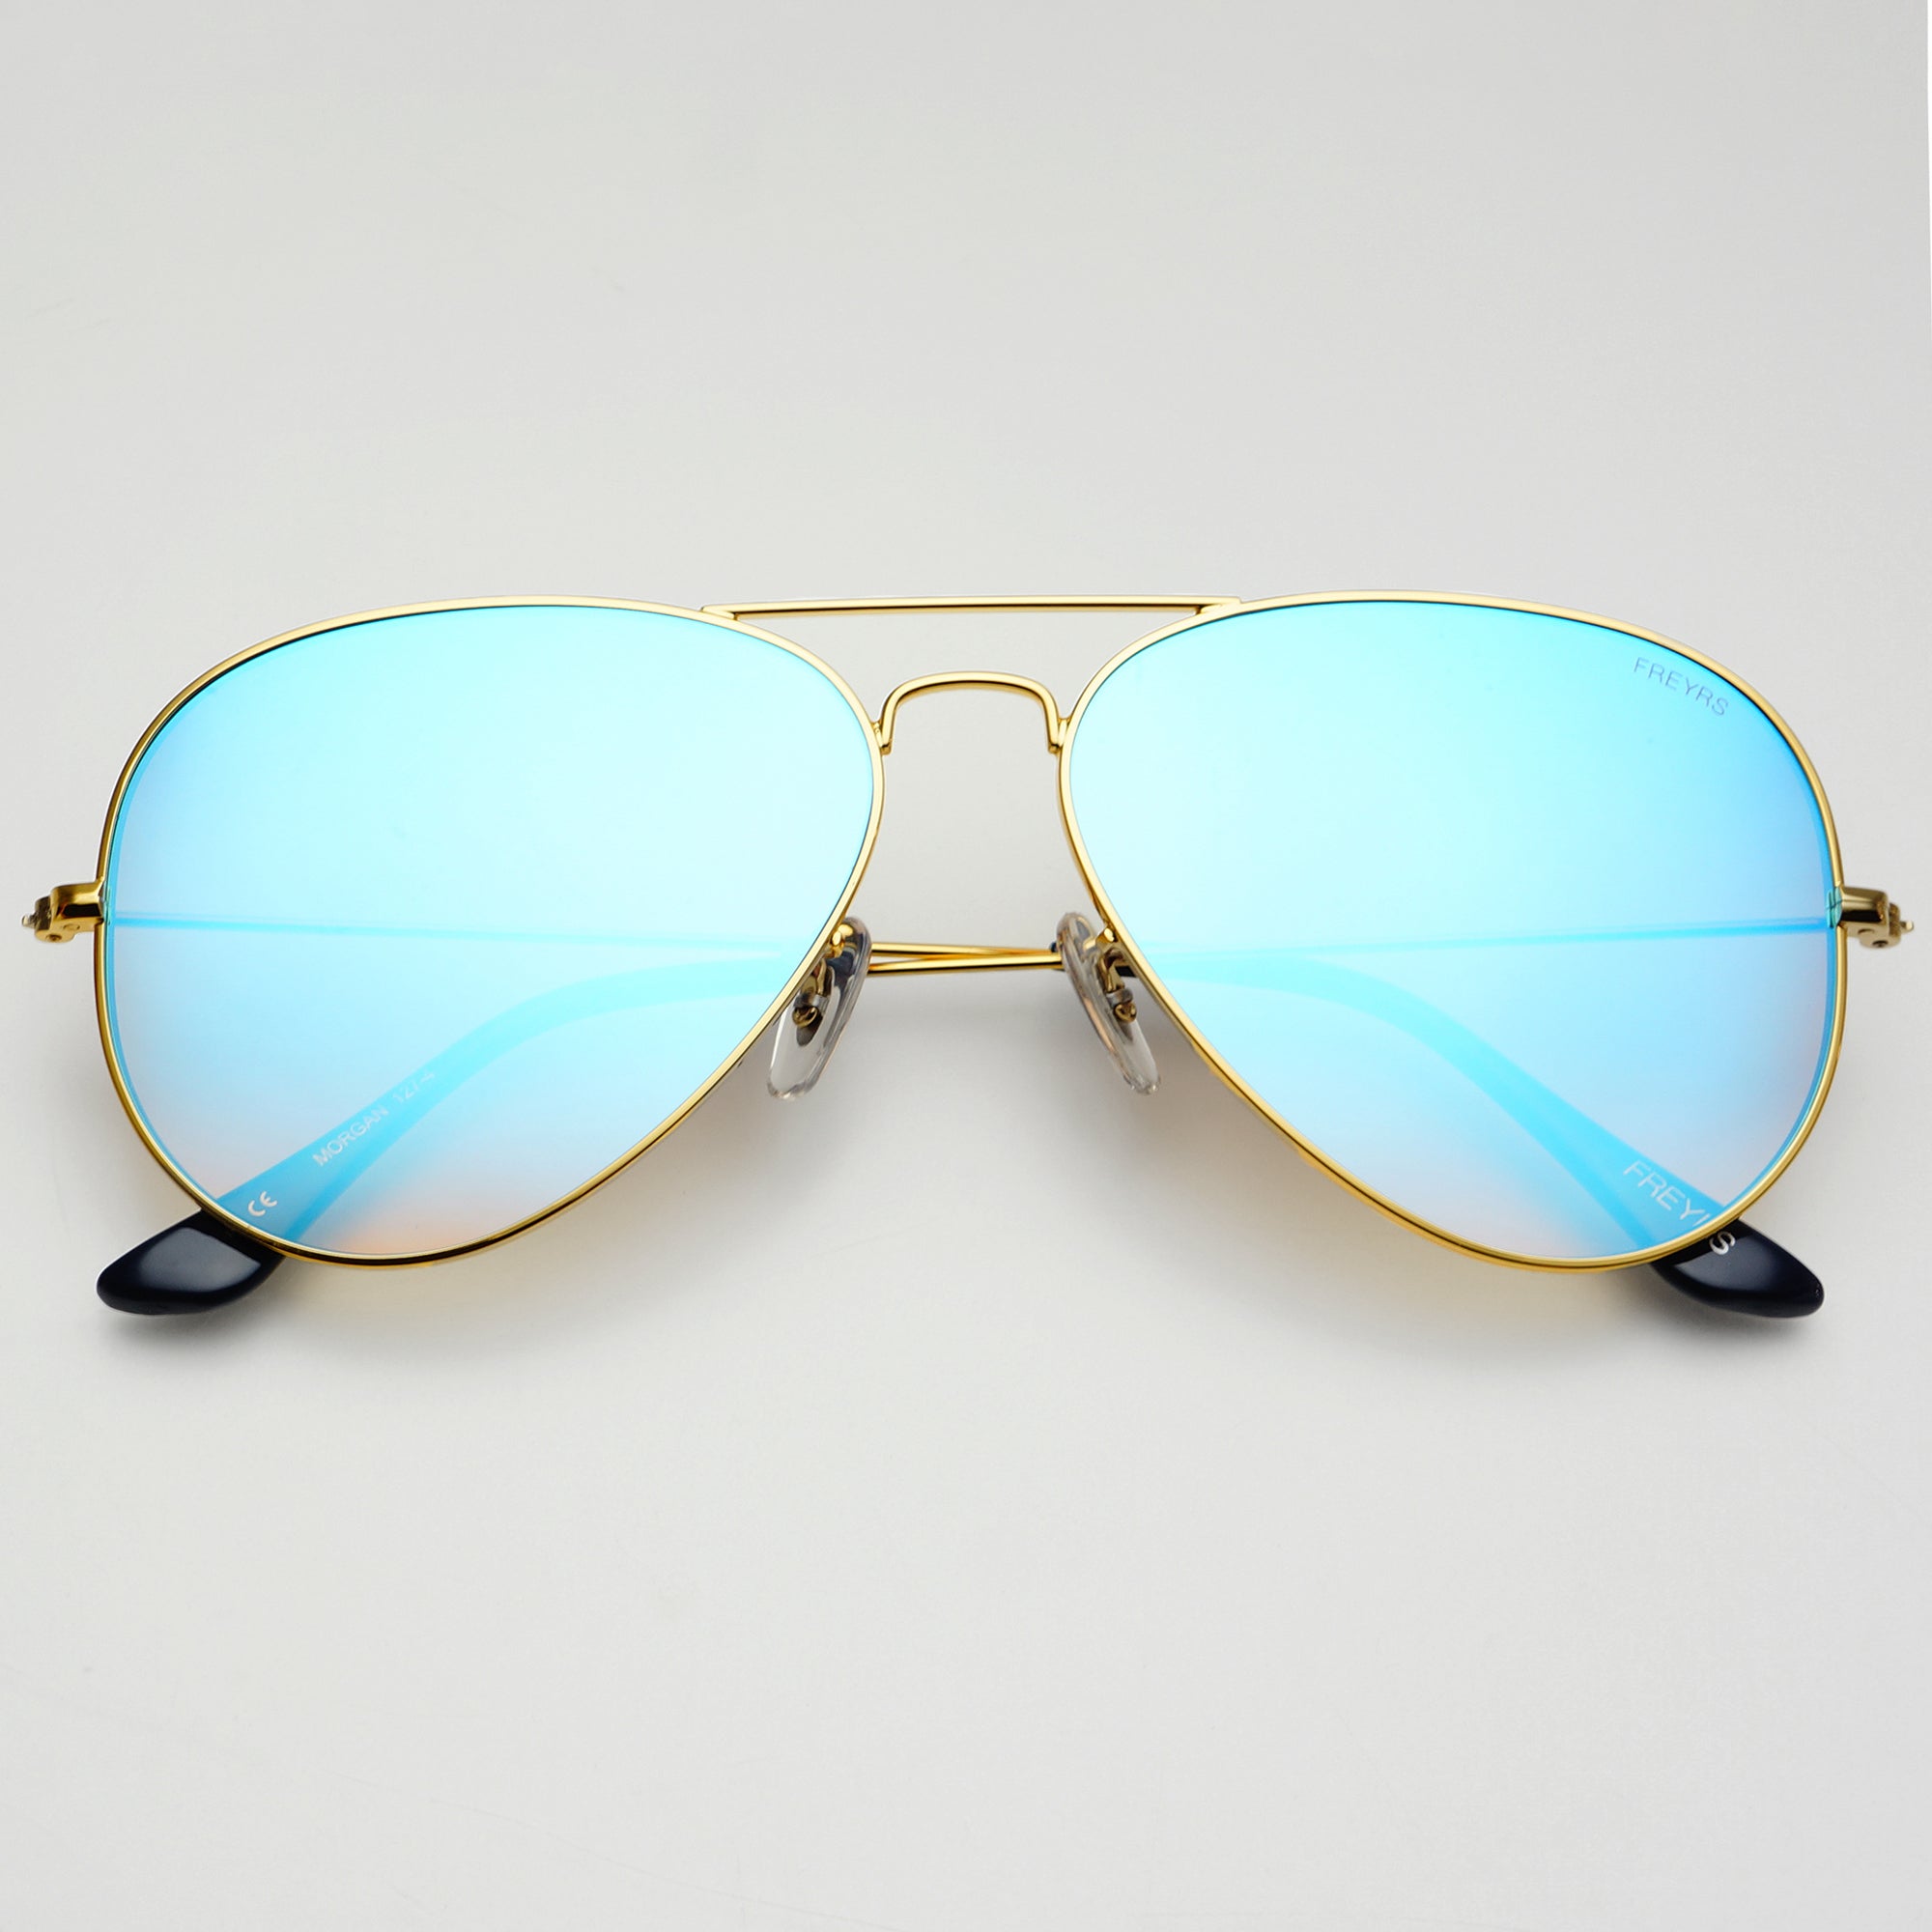 Freyrs Premium Morgan Gold / Blue Mirror Sunglasses - Gold / Blue Mirror